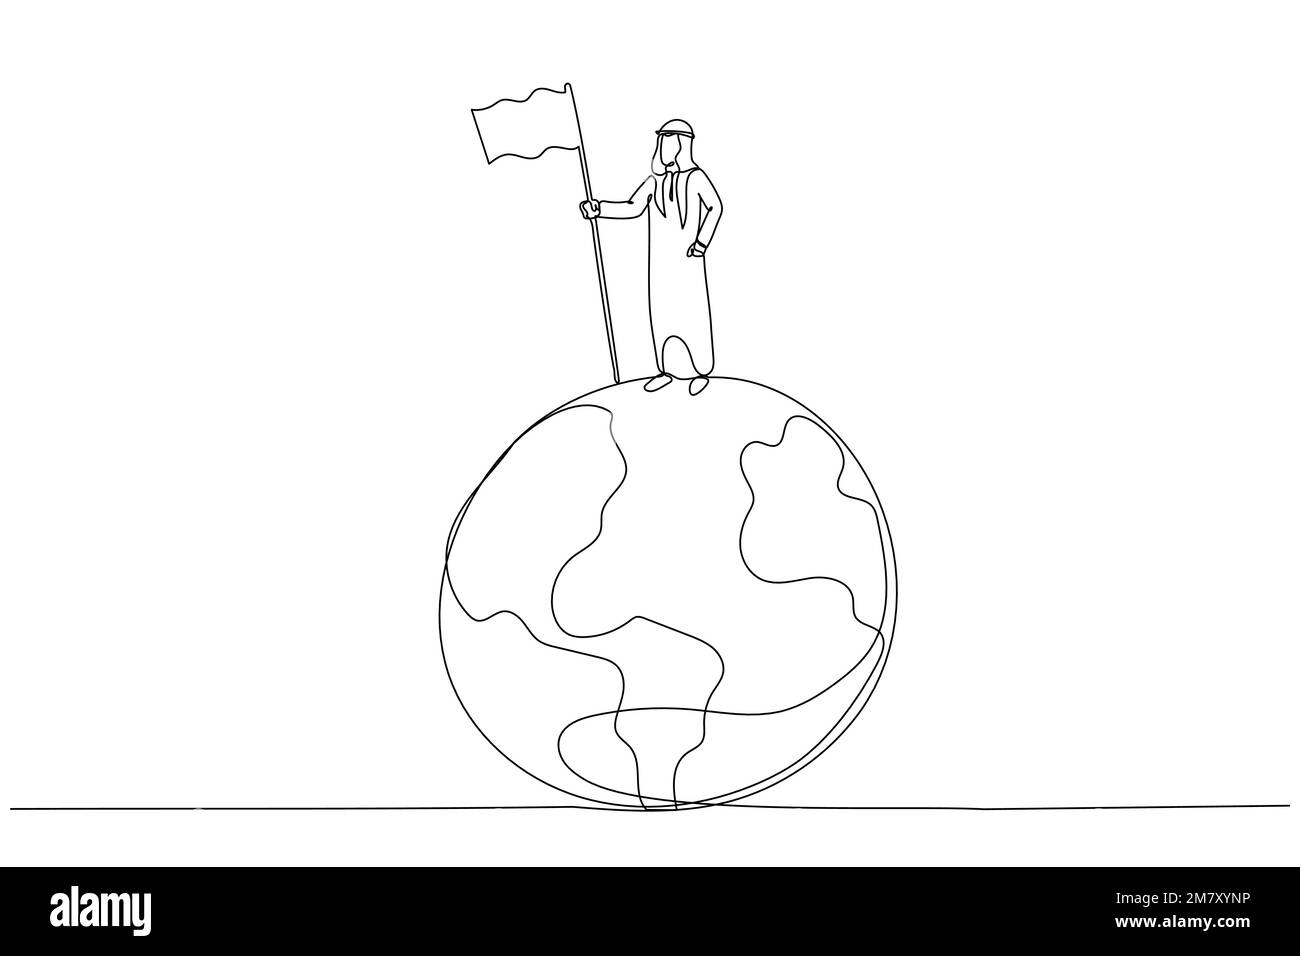 Illustration of arab businessman climb up ladder holding winning flag on globe winning global business competition. Single line art style design Stock Vector